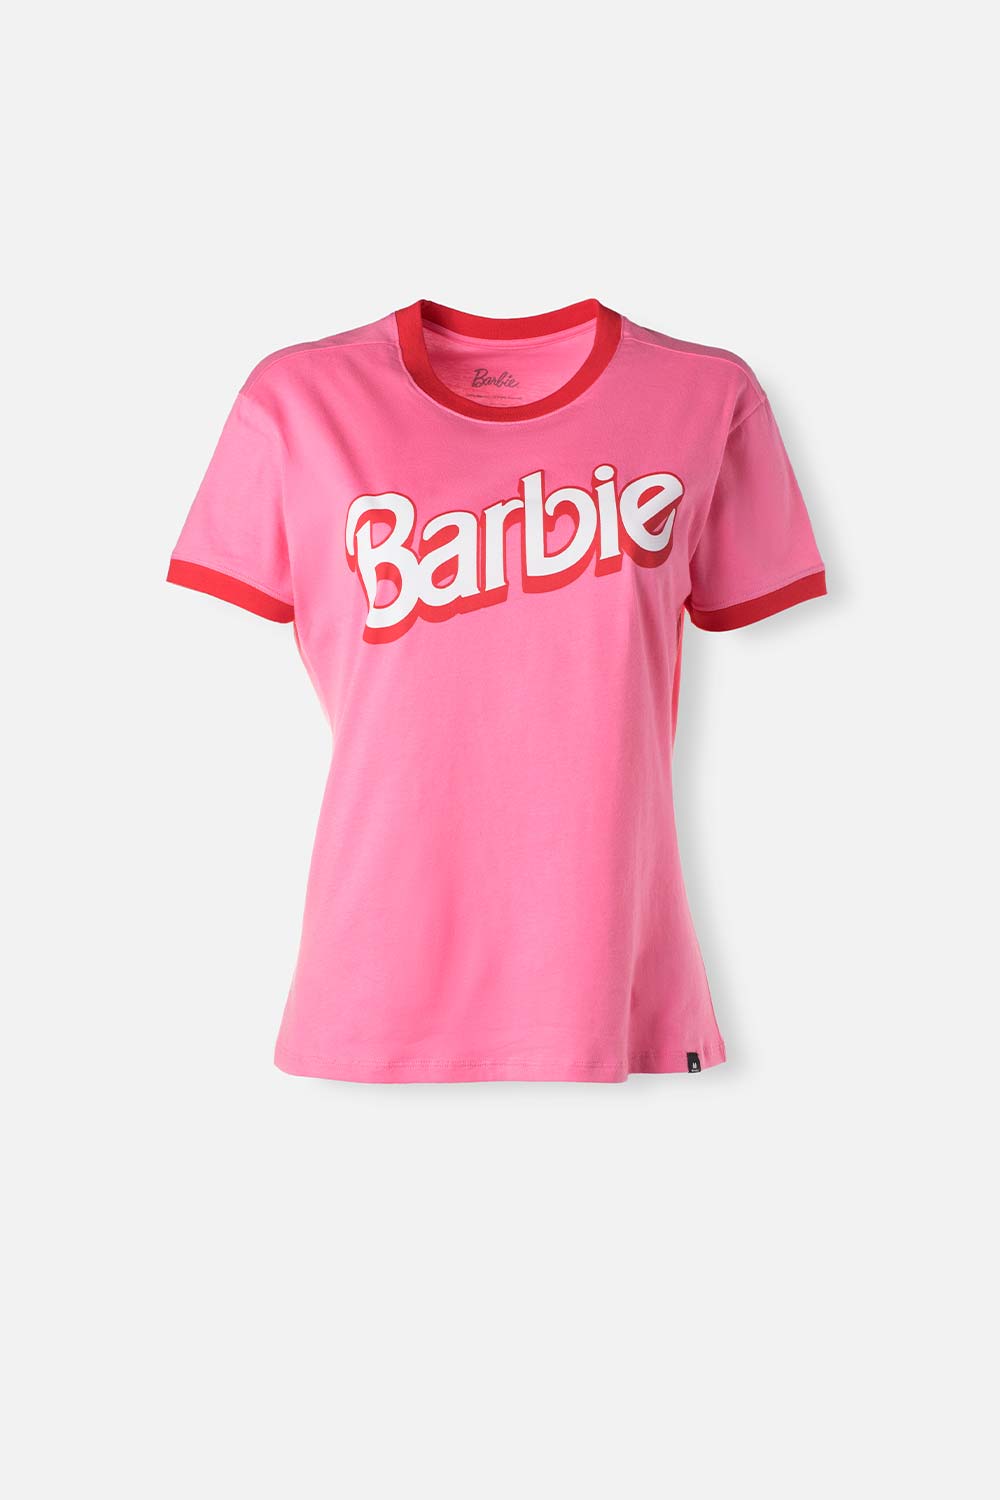 Camiseta de Barbie rosada manga corta para mujer